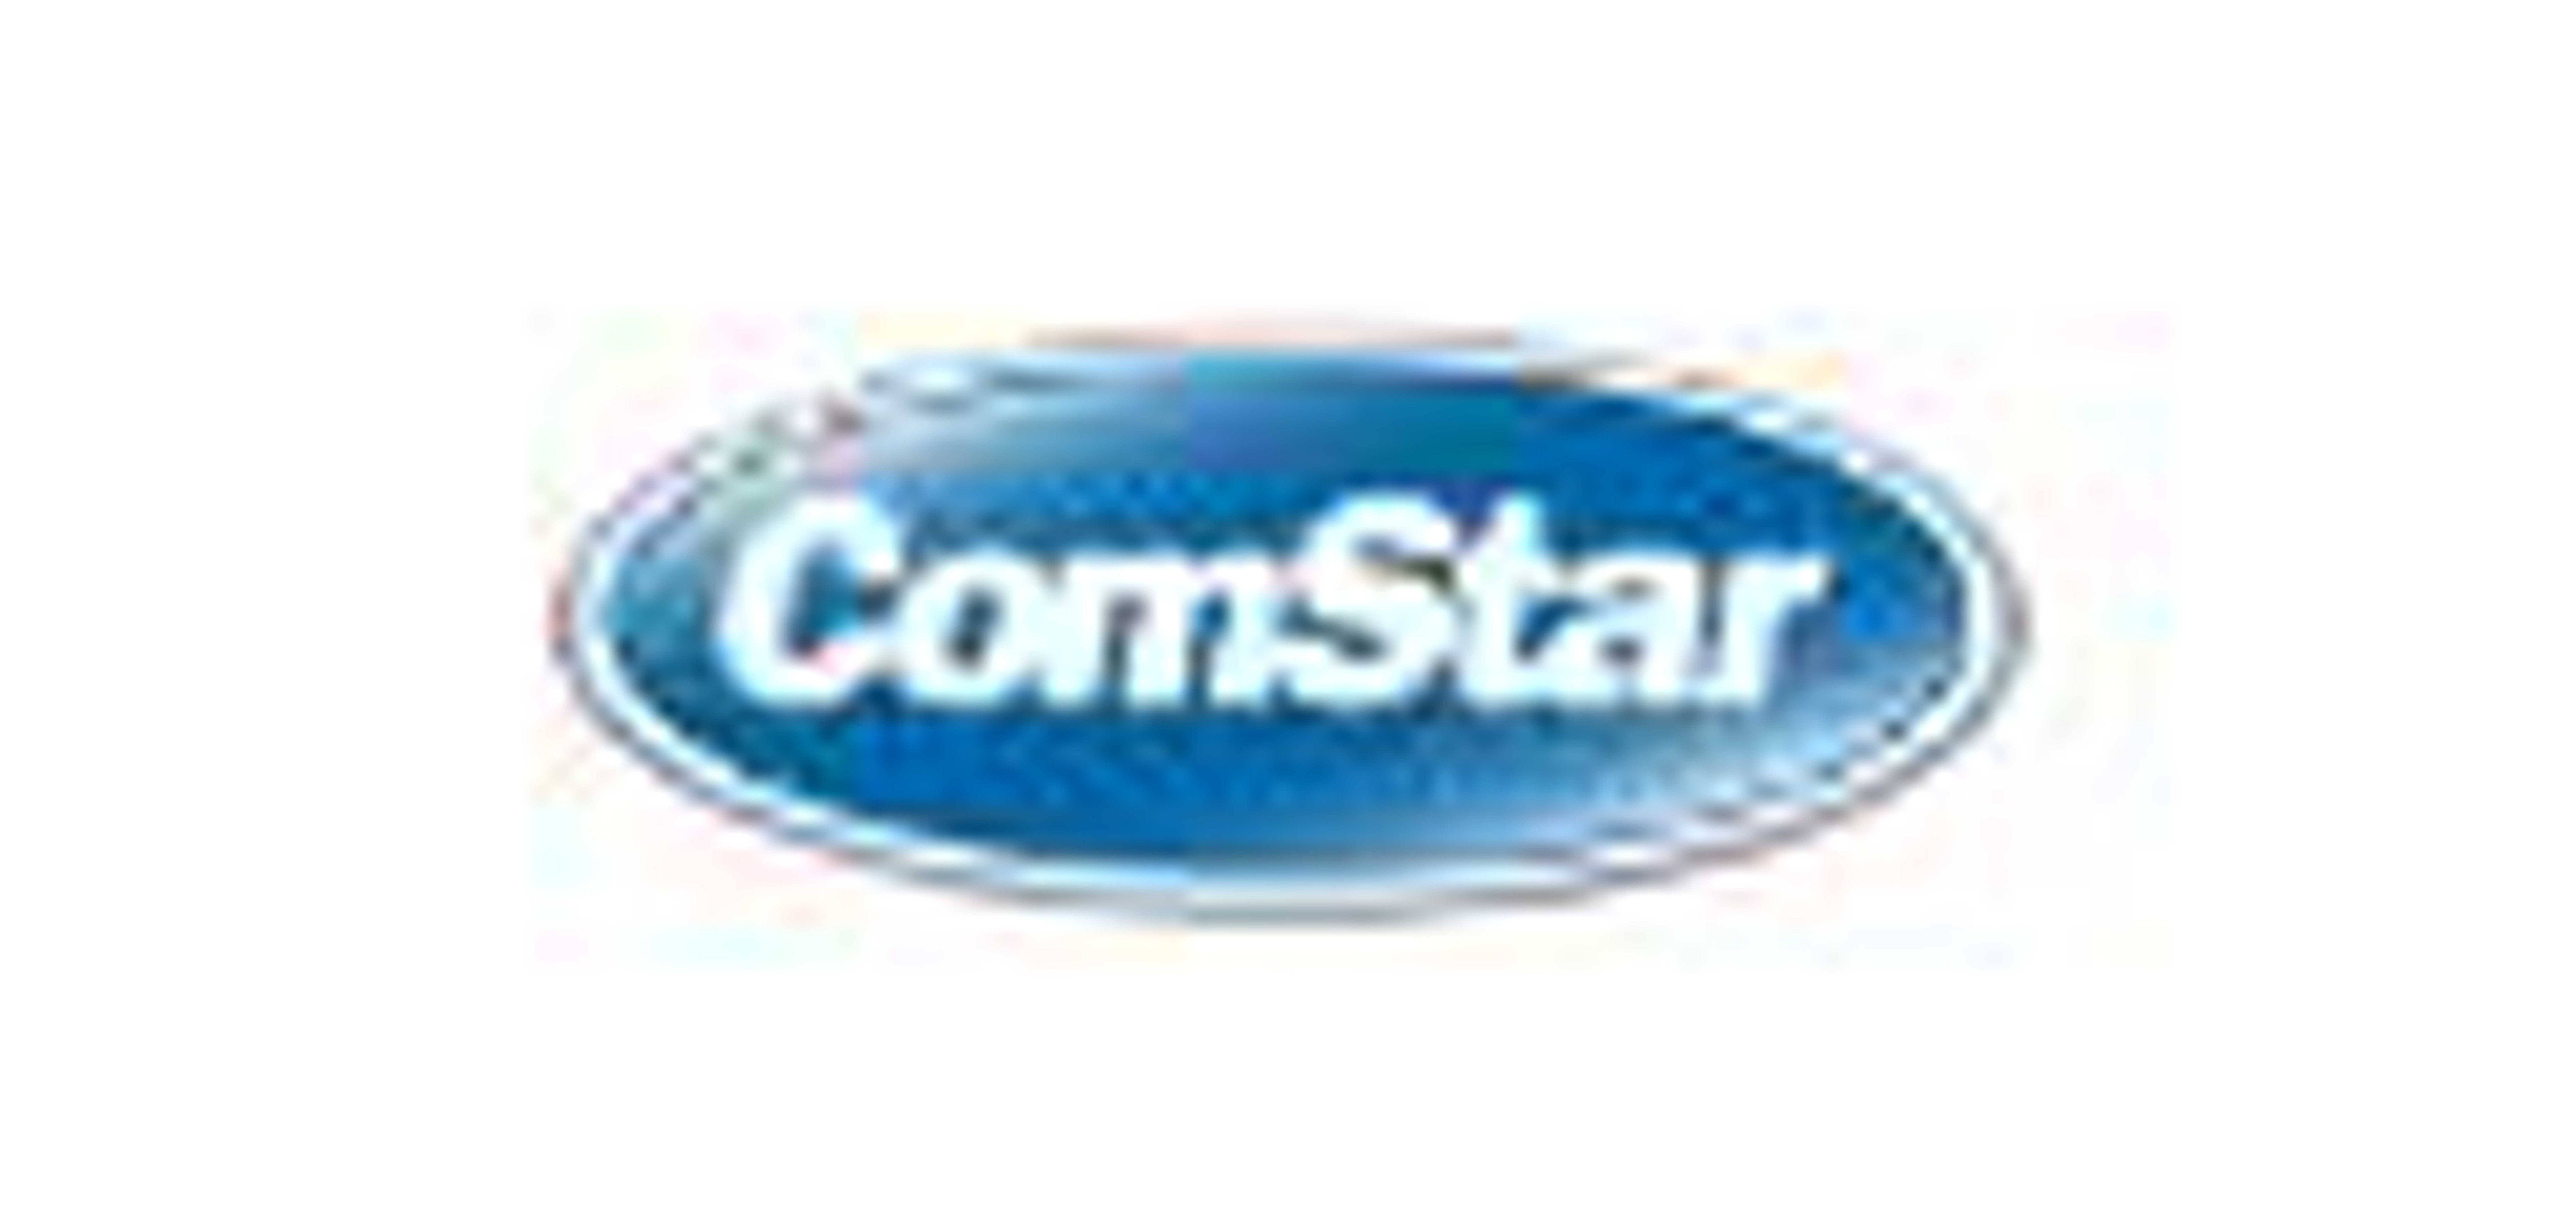 ComStar